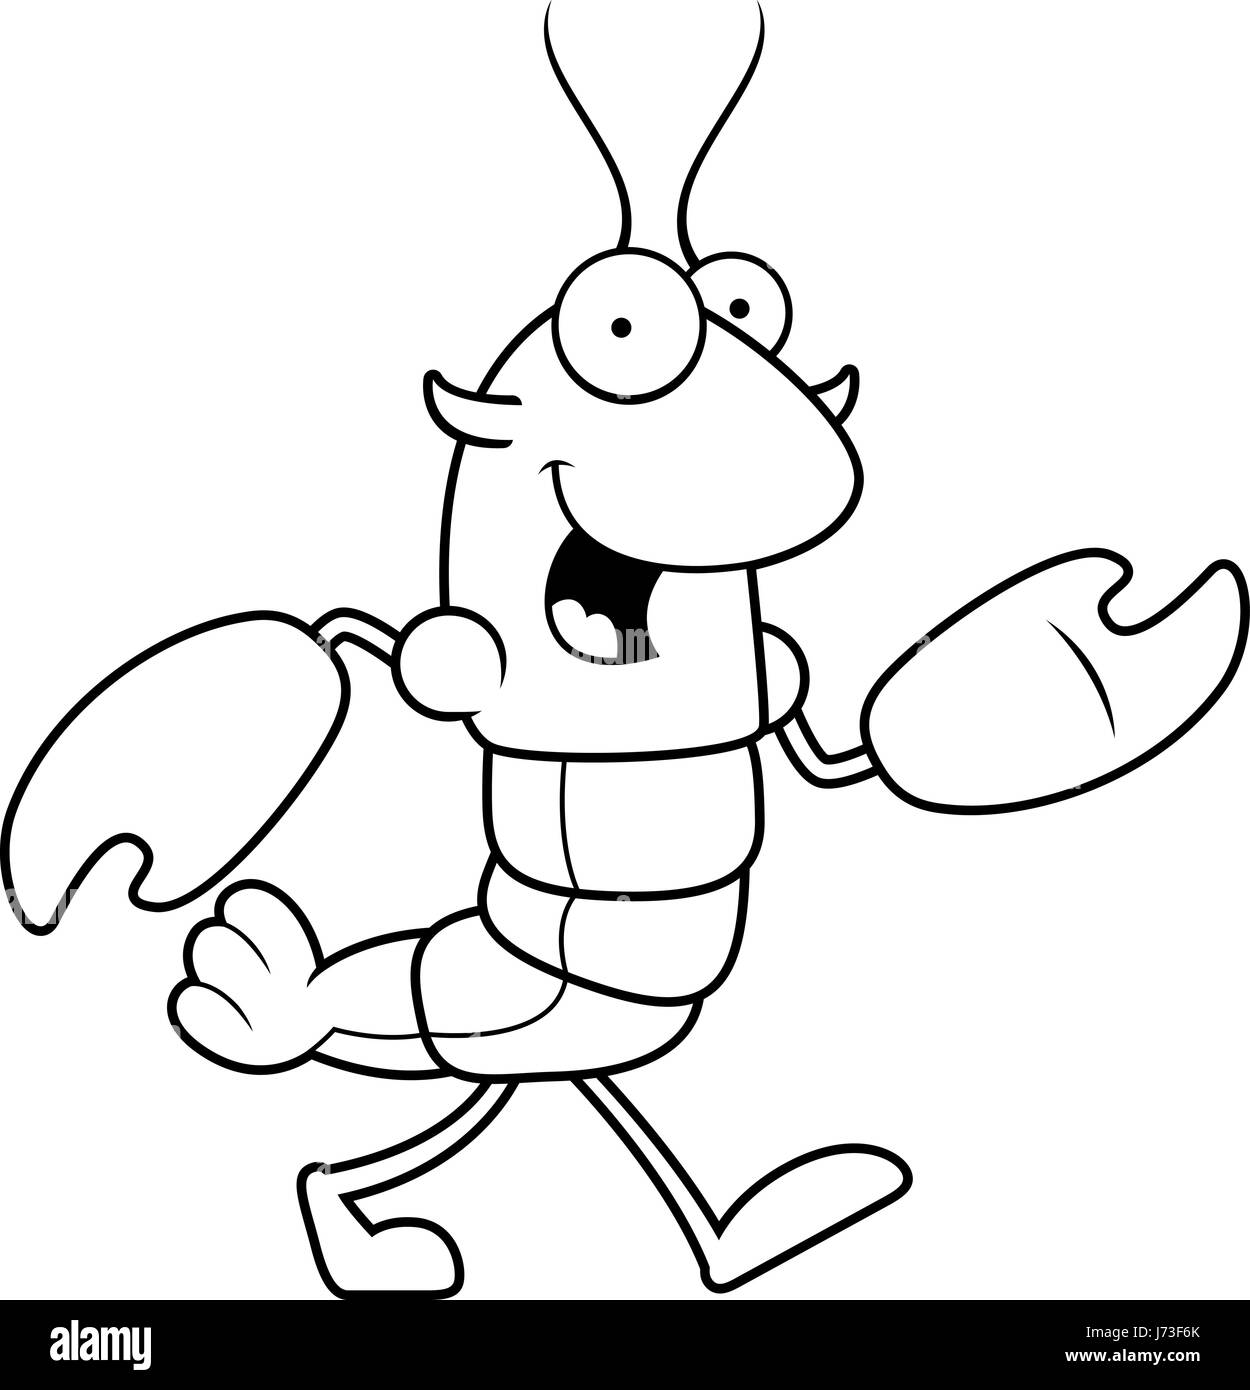 A cartoon illustration of a crawfish walking. Stock Vector